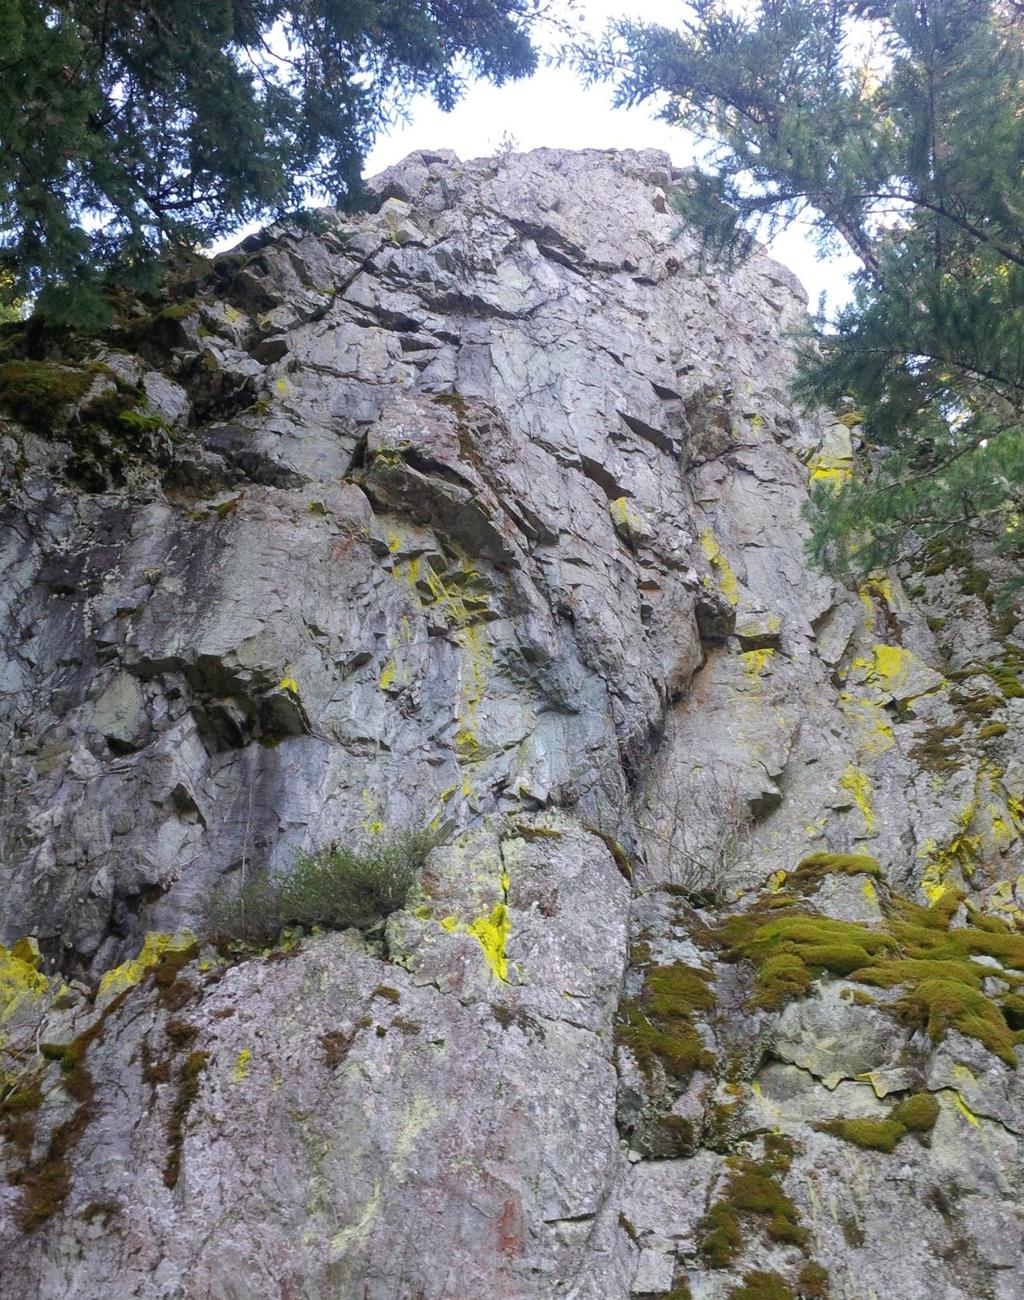 Large 30+ meter cliff